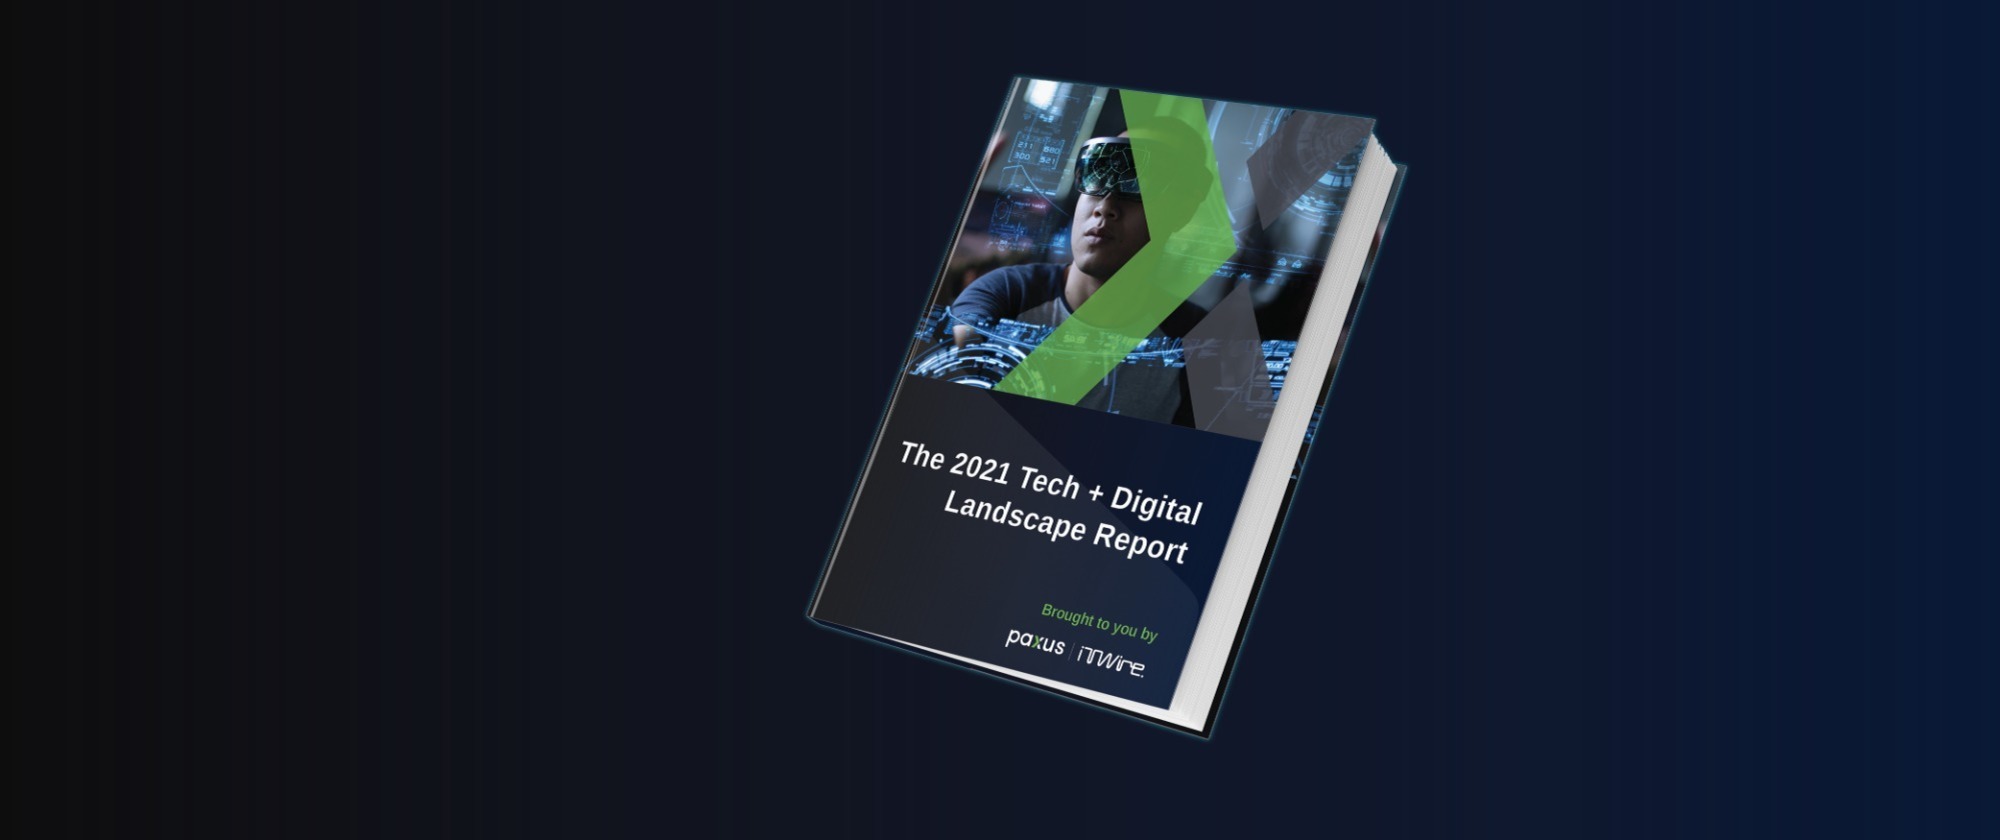 2021 Tech + Digital Landscape Report ITWire Paxus